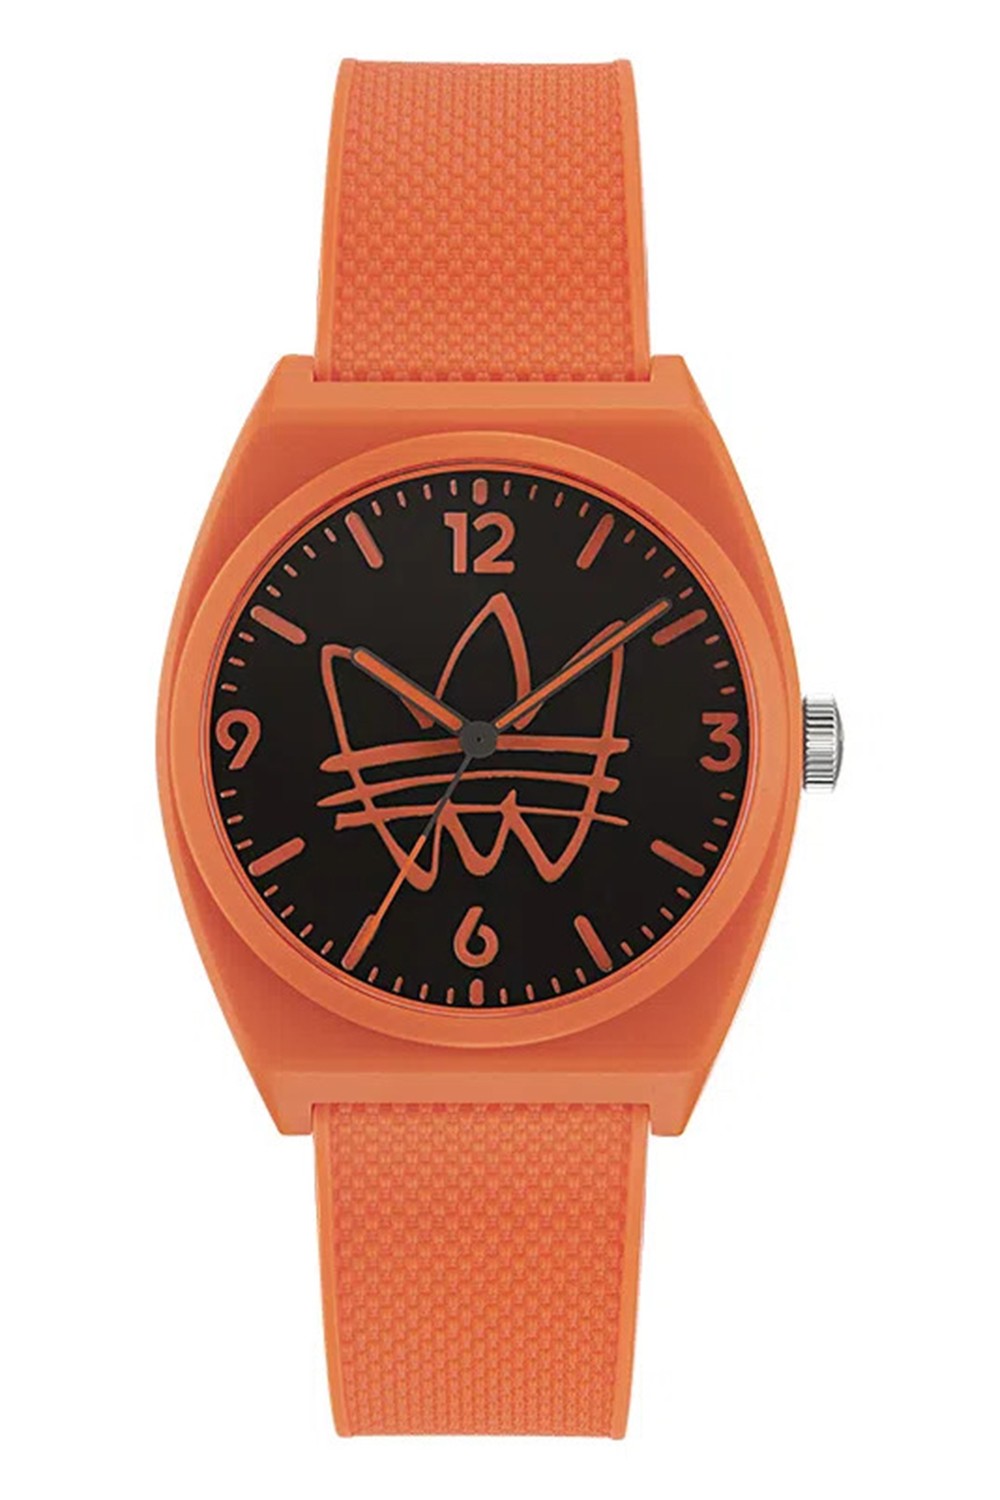 Adidas Originals Women\'s Watch Two Adidas Two Rubber Clicktime.eu» AOST22562 Orange Watch online Watch Comprar | unisex Rubber Project Adidas AOST22562 Orange AOST22562 Watch Barato unisex Comprar | Project